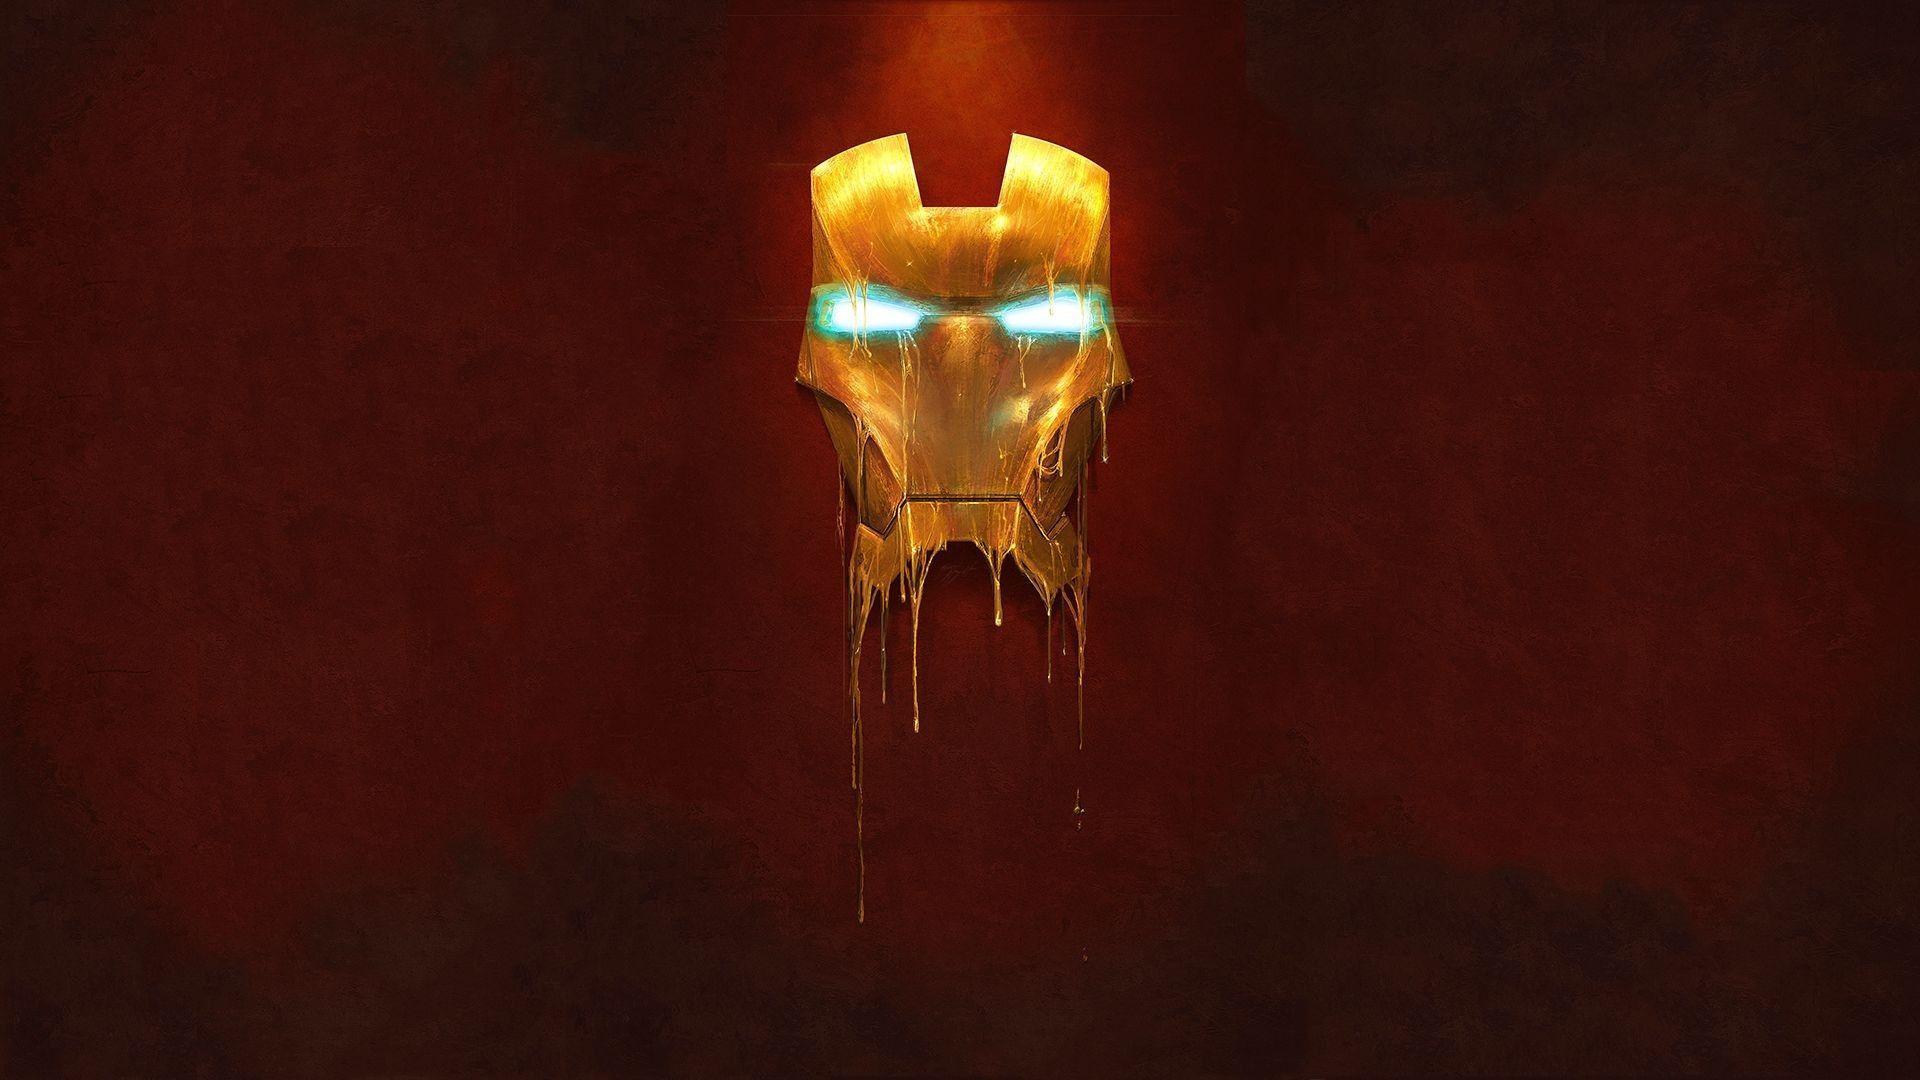 Iron Man 3 Wallpapers